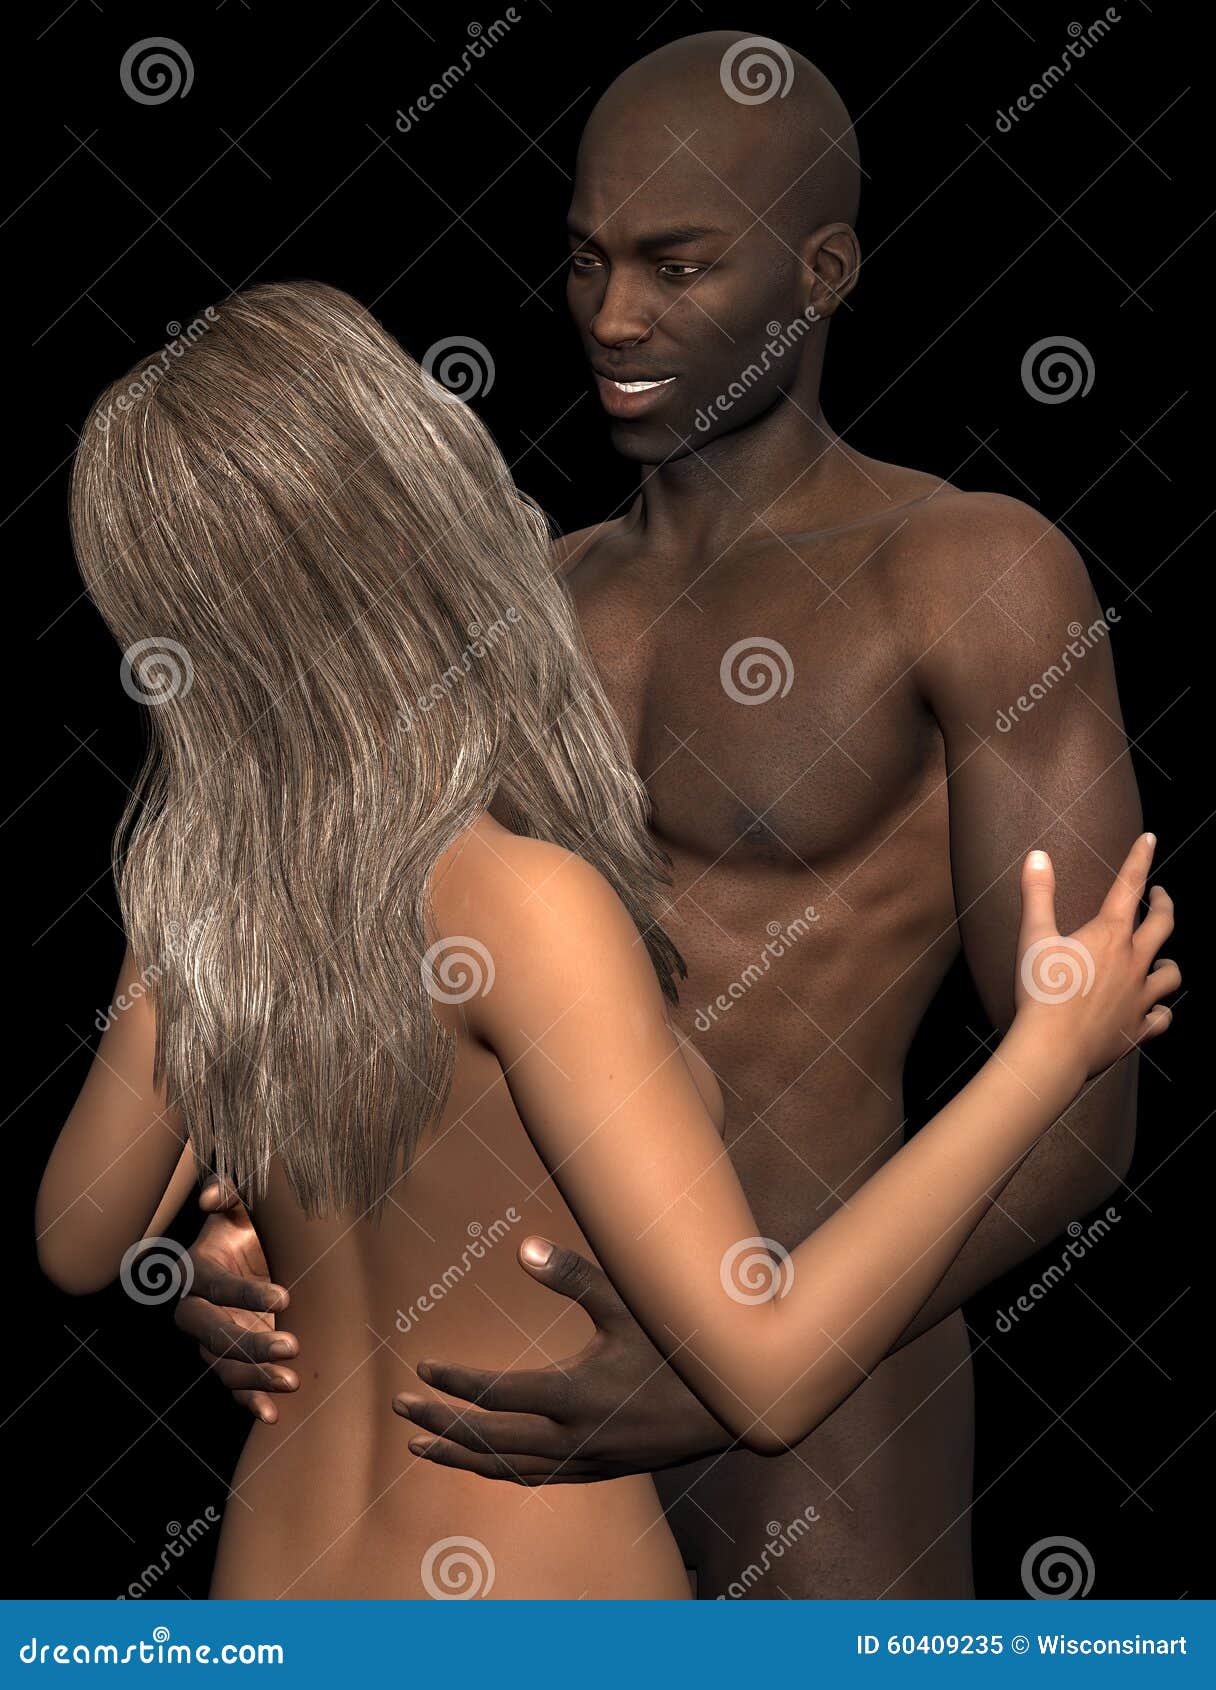 Best of I love interracial sex